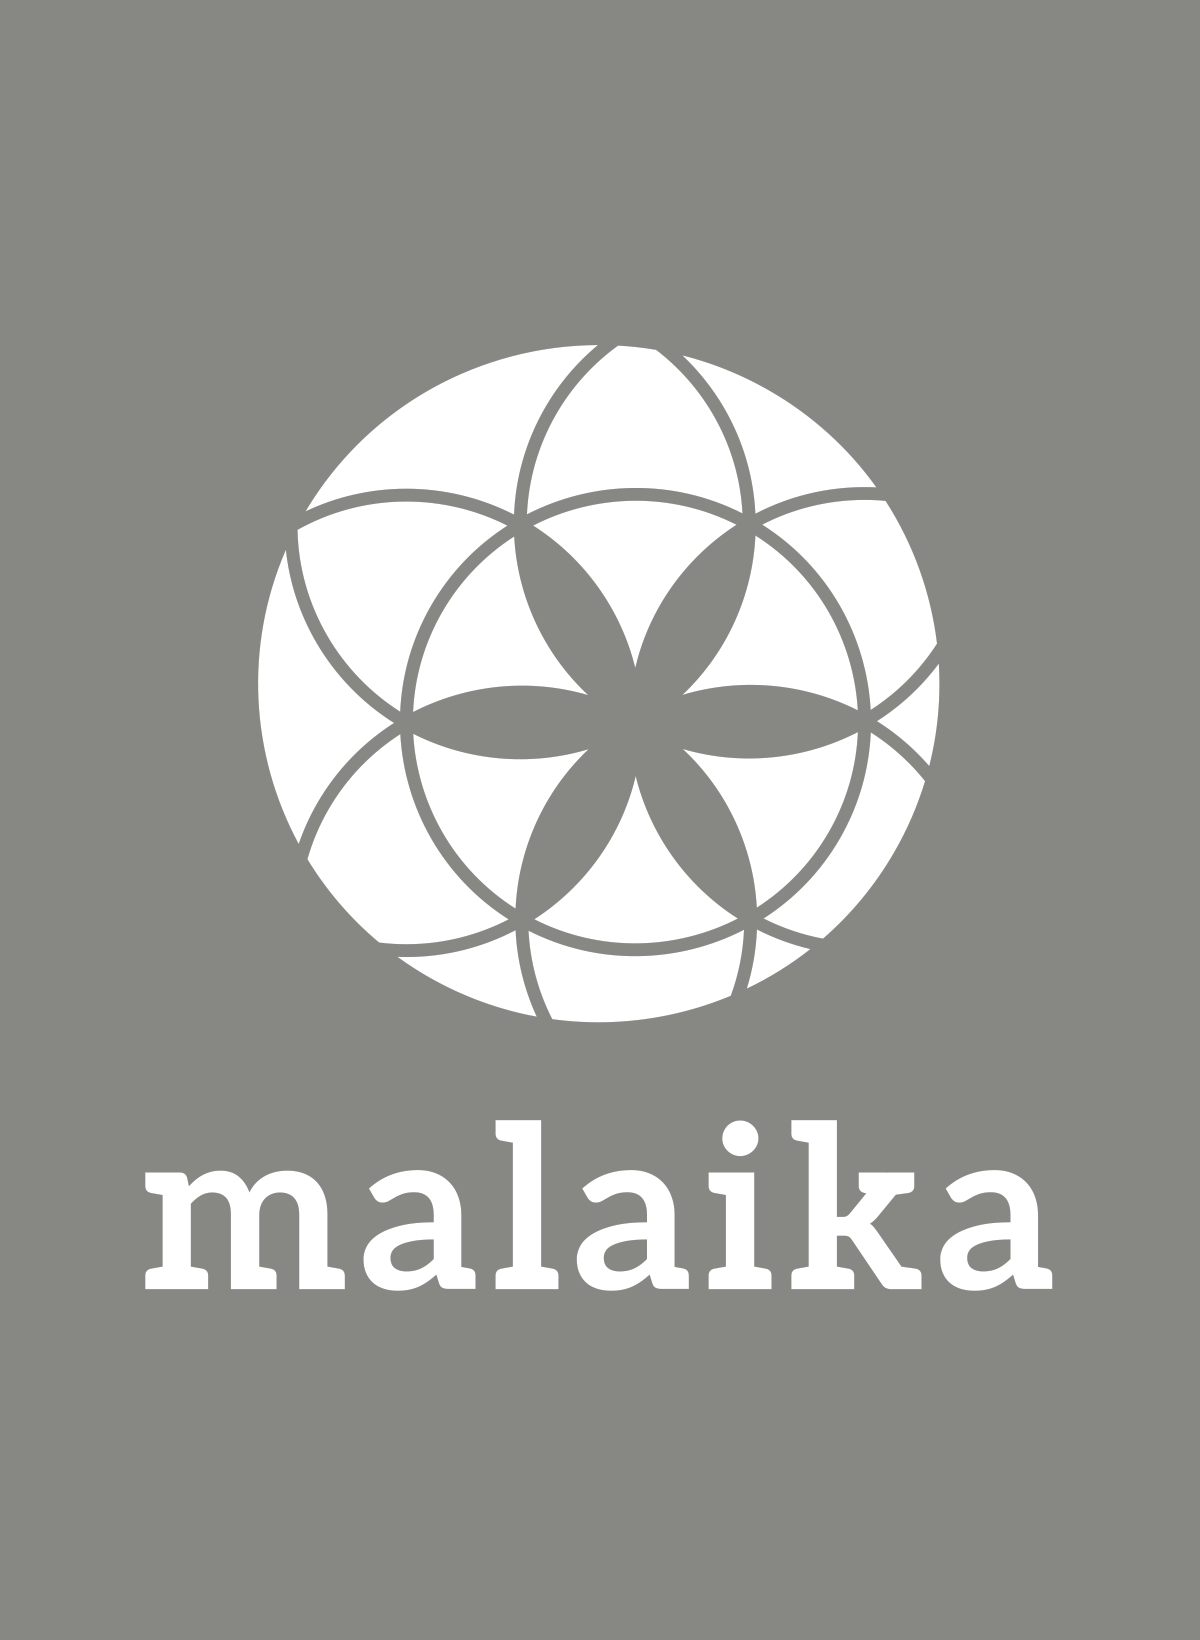 Malaika Pictures GmbH